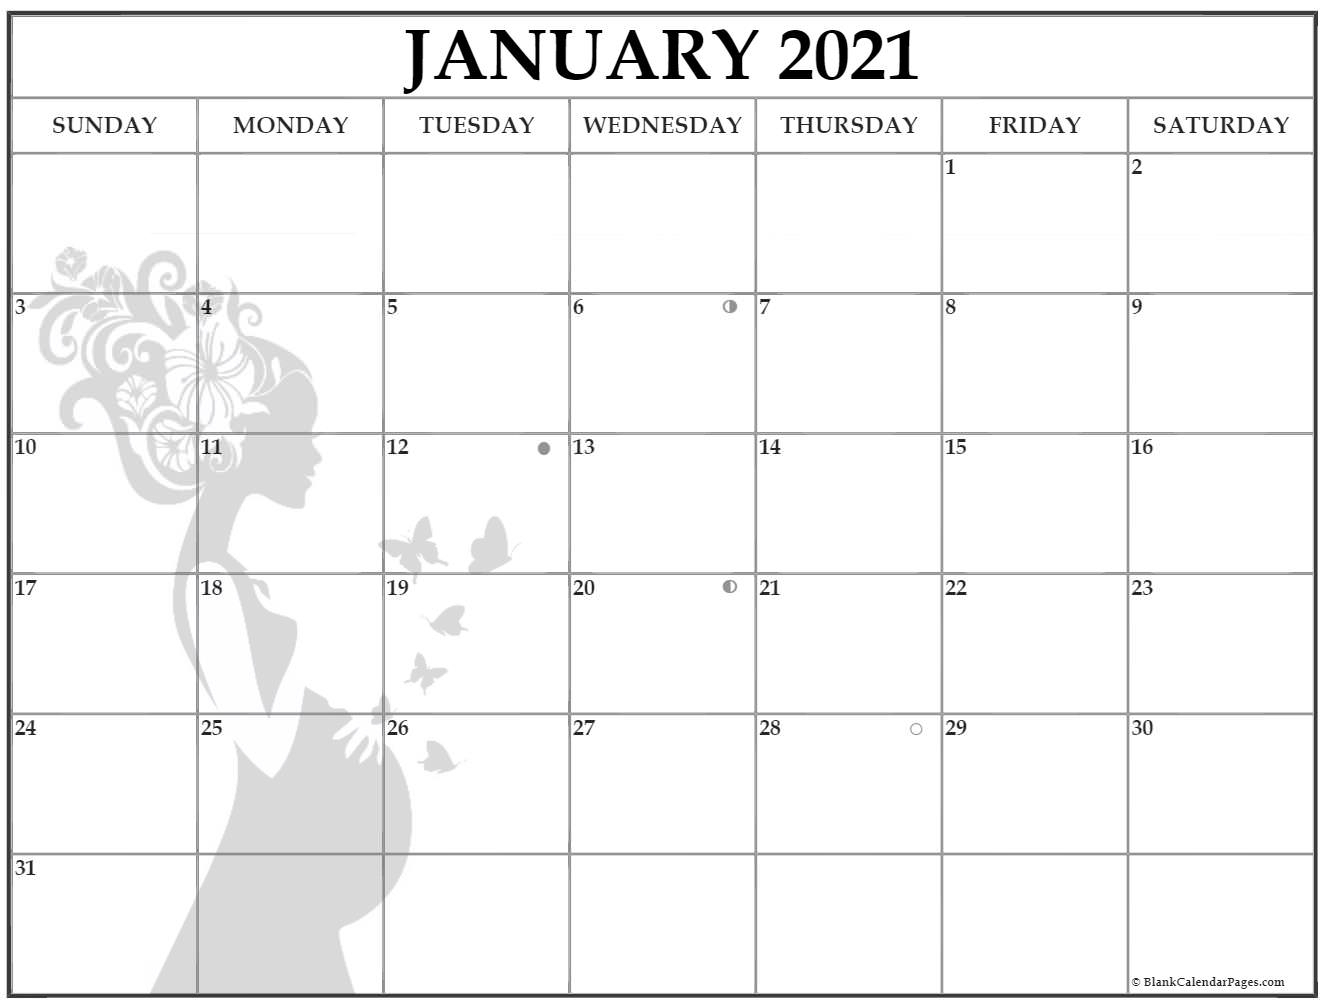 January 2021 Pregnancy Calendar Fertility Calendar